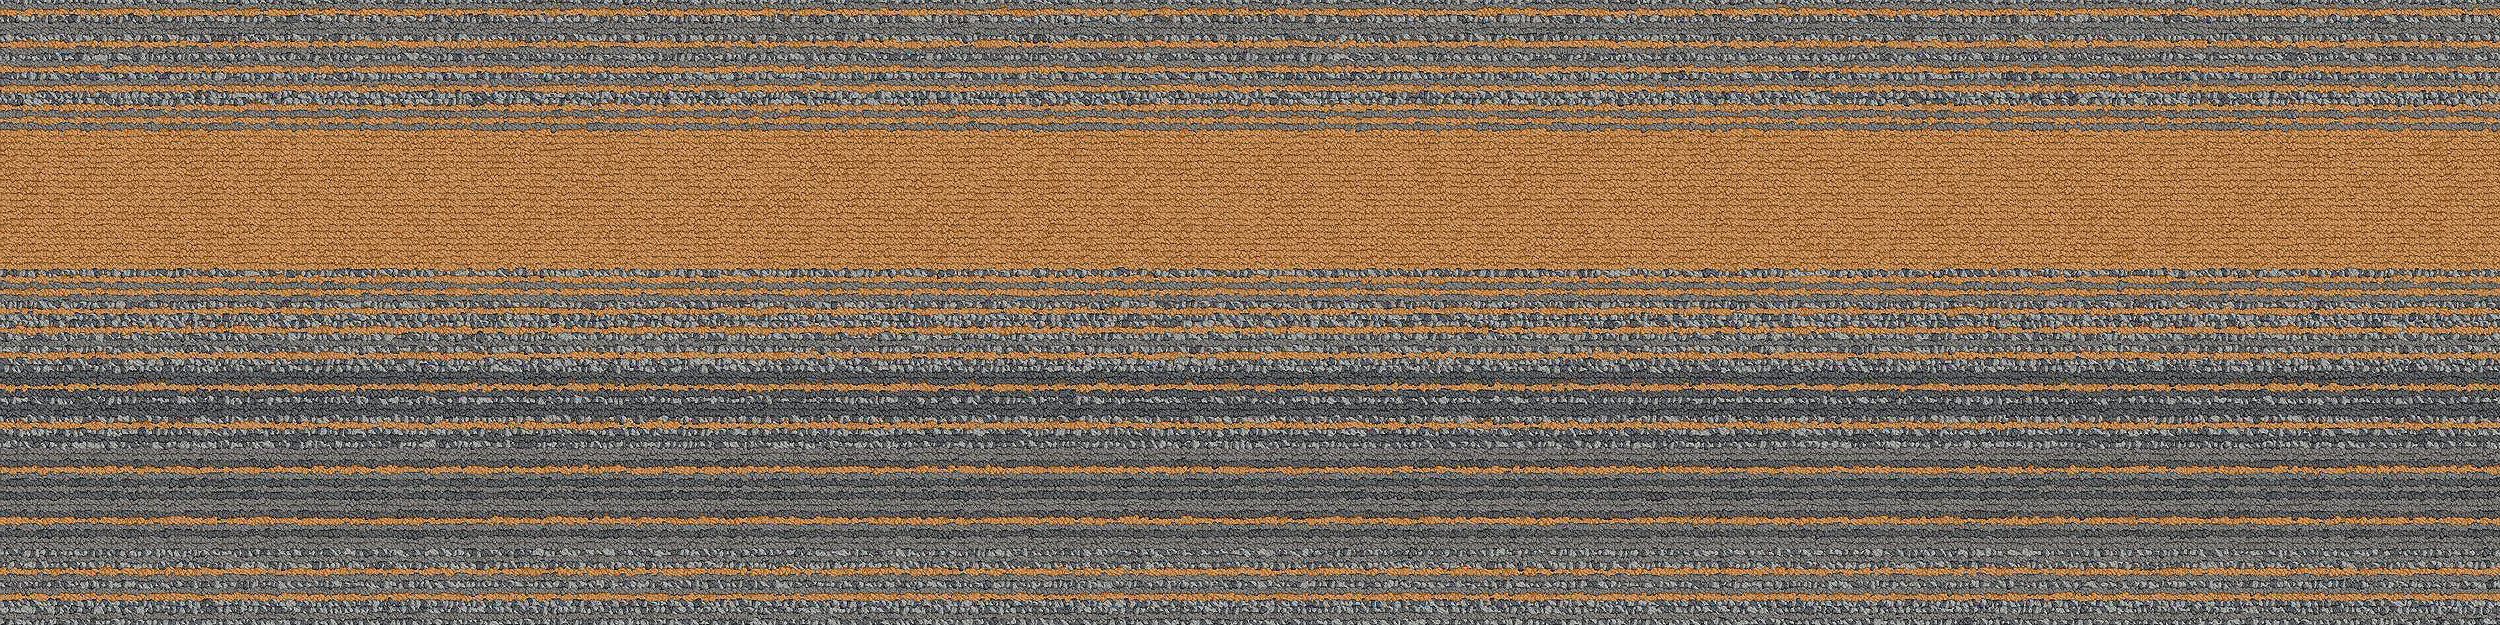 SS218 Carpet Tile In Sidewalk/Naranja imagen número 5